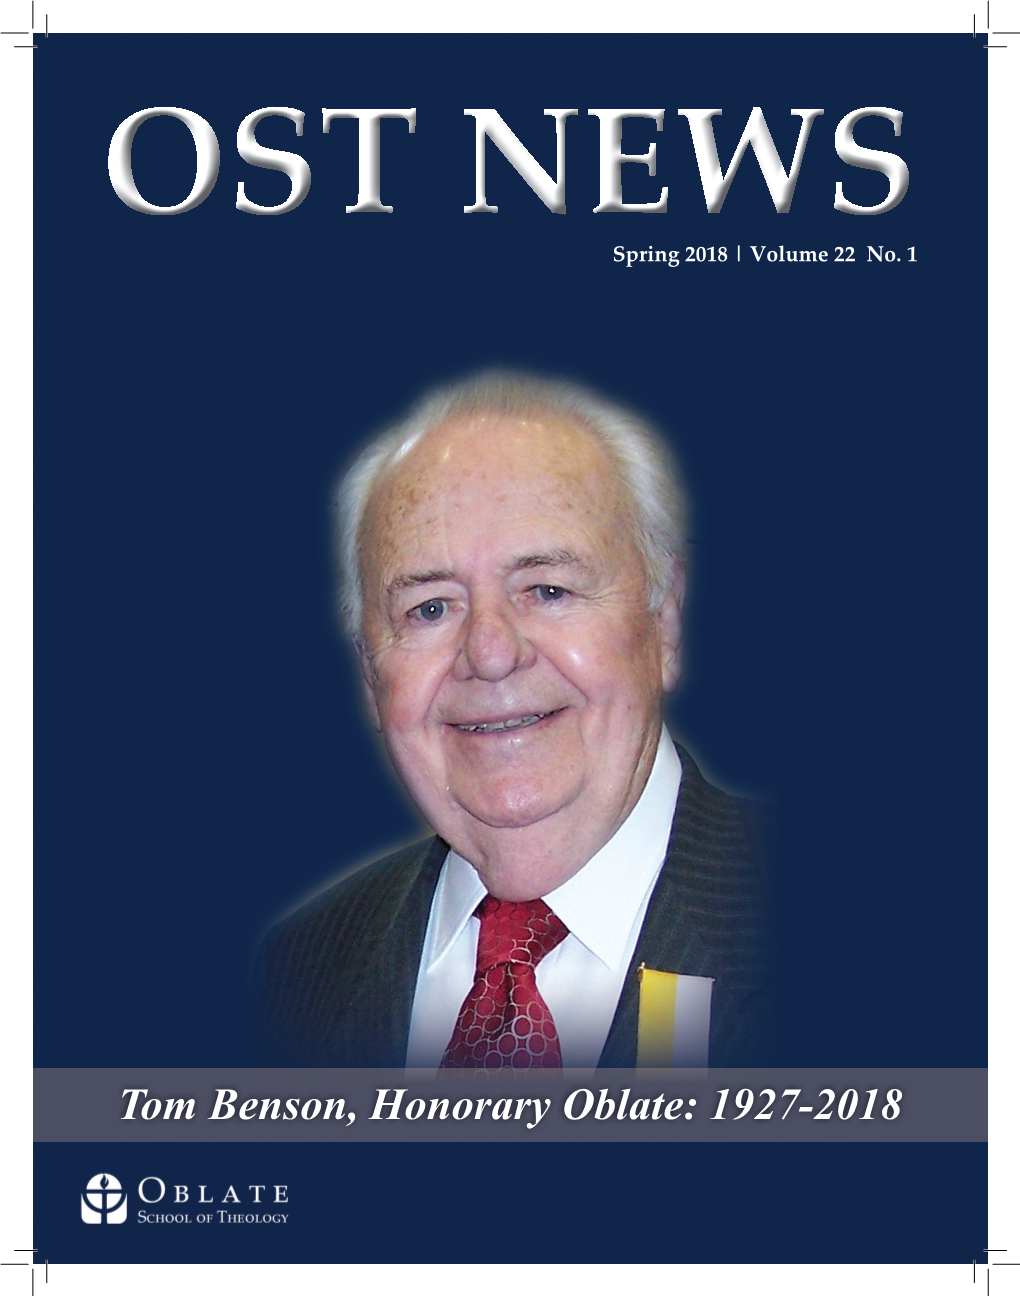 Tom Benson, Honorary Oblate: 1927-2018